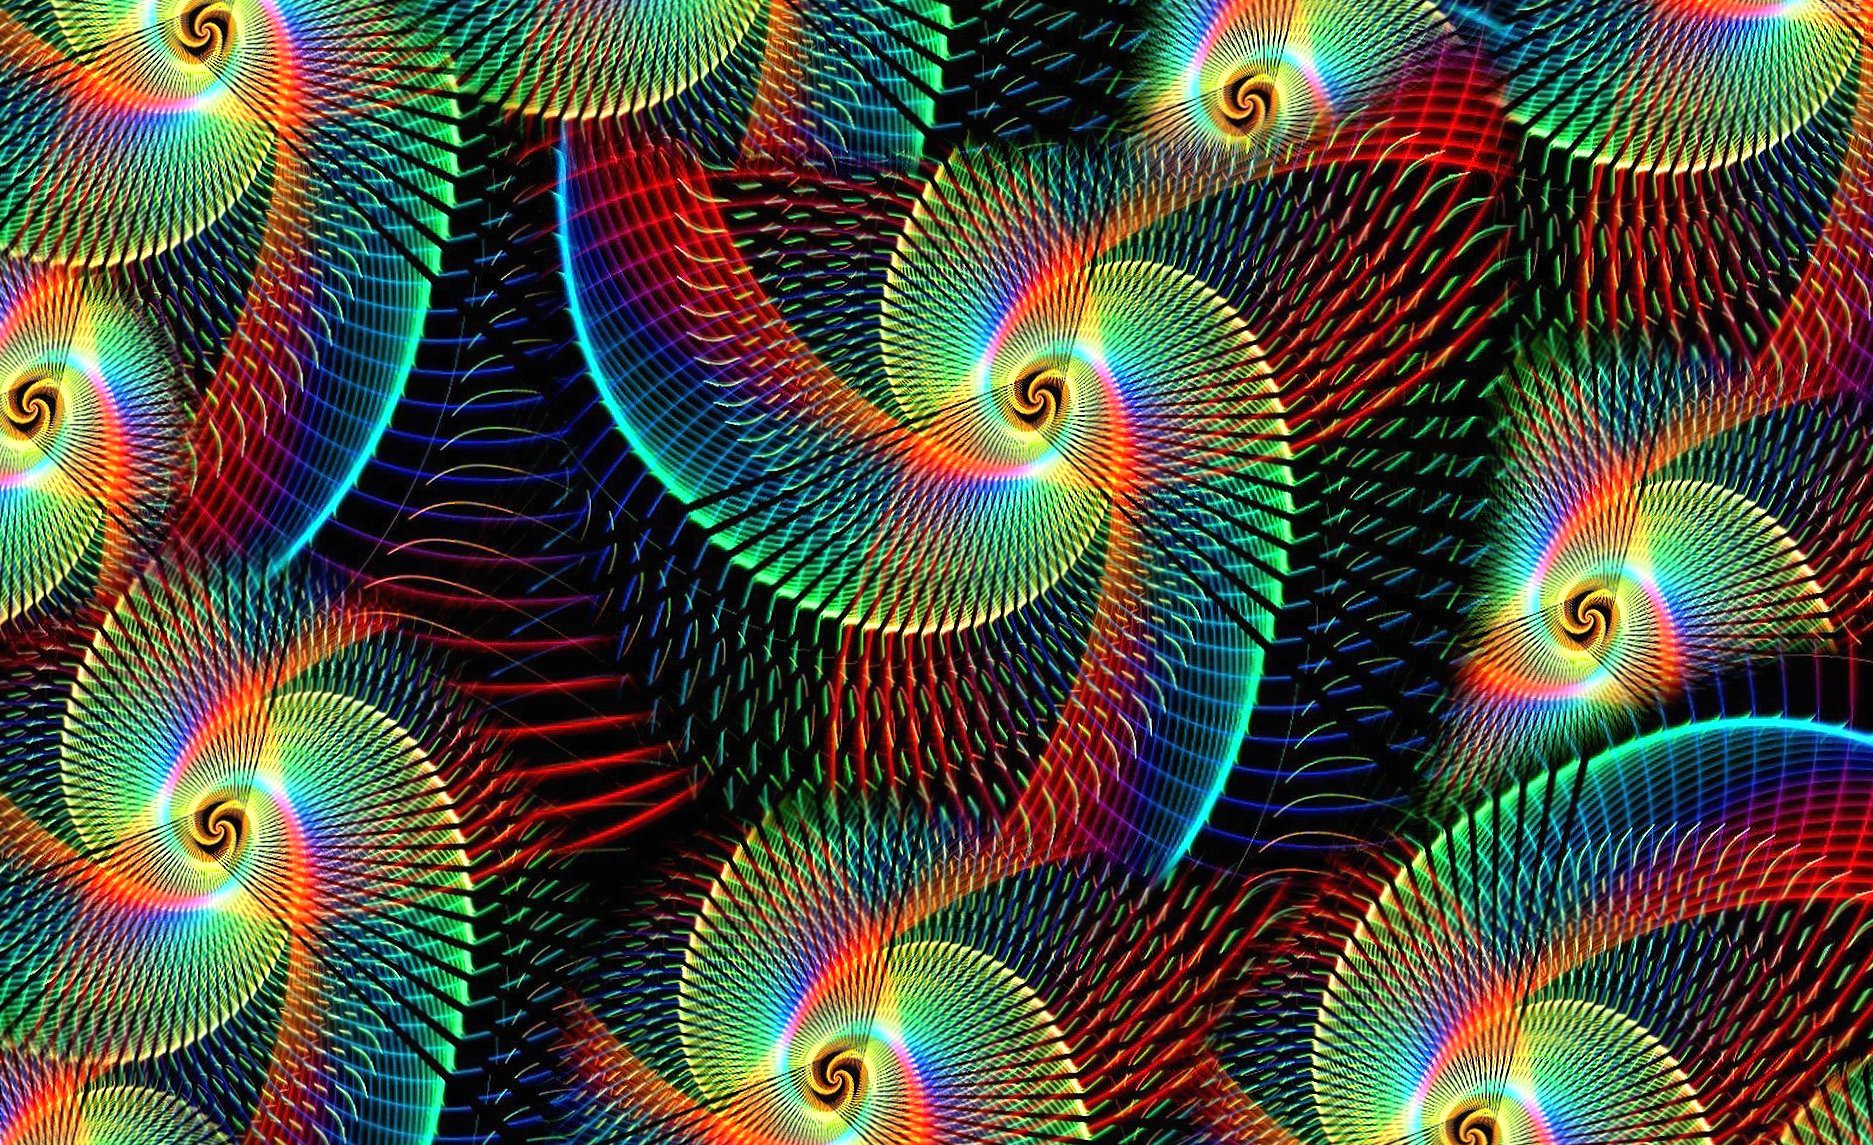 Rainbow swirls at 1024 x 1024 iPad size wallpapers HD quality